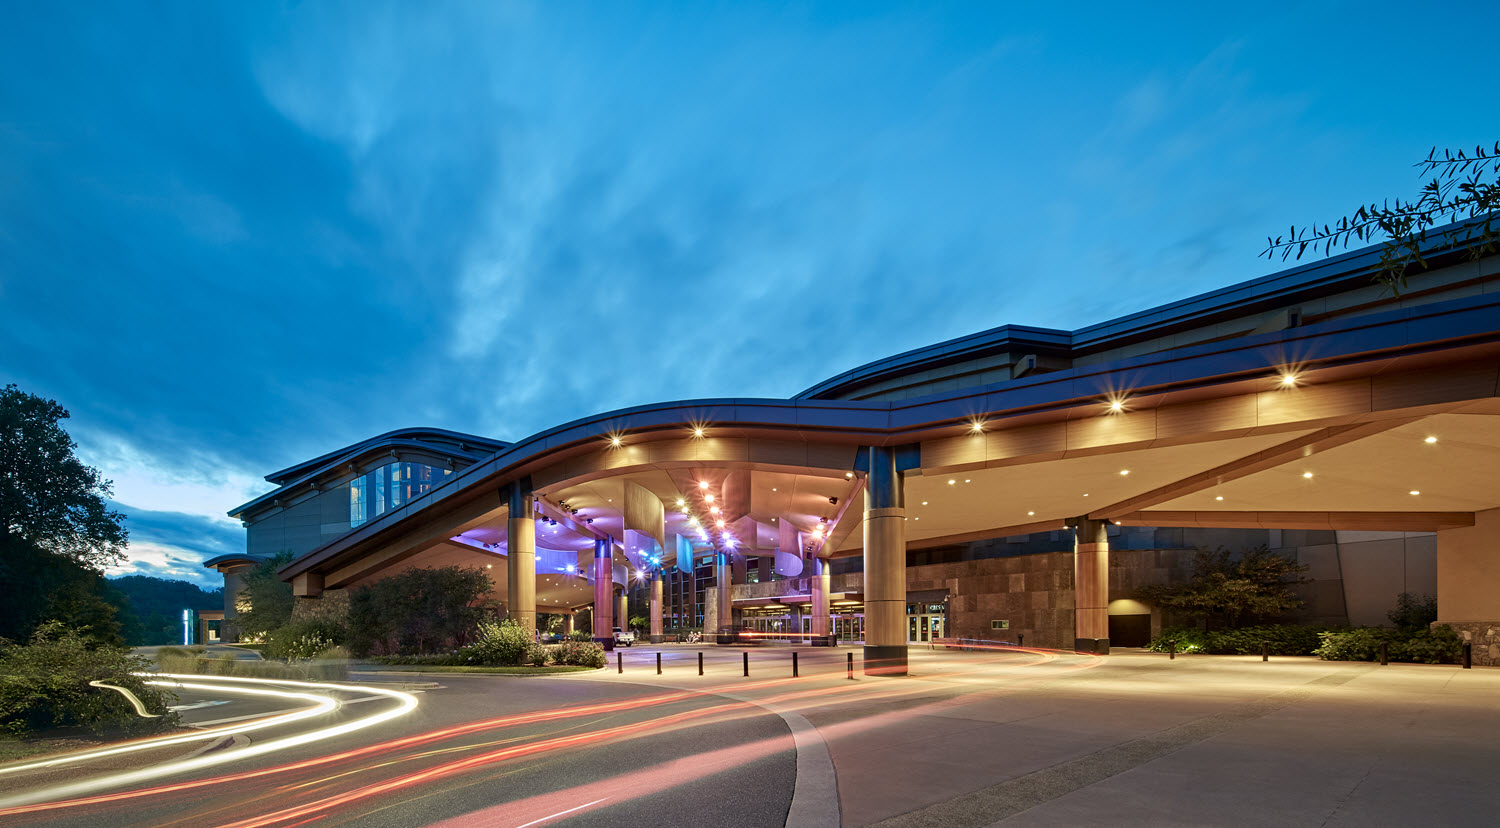 Entrance to the beautiful Harrah’s Cherokee Casino Resort